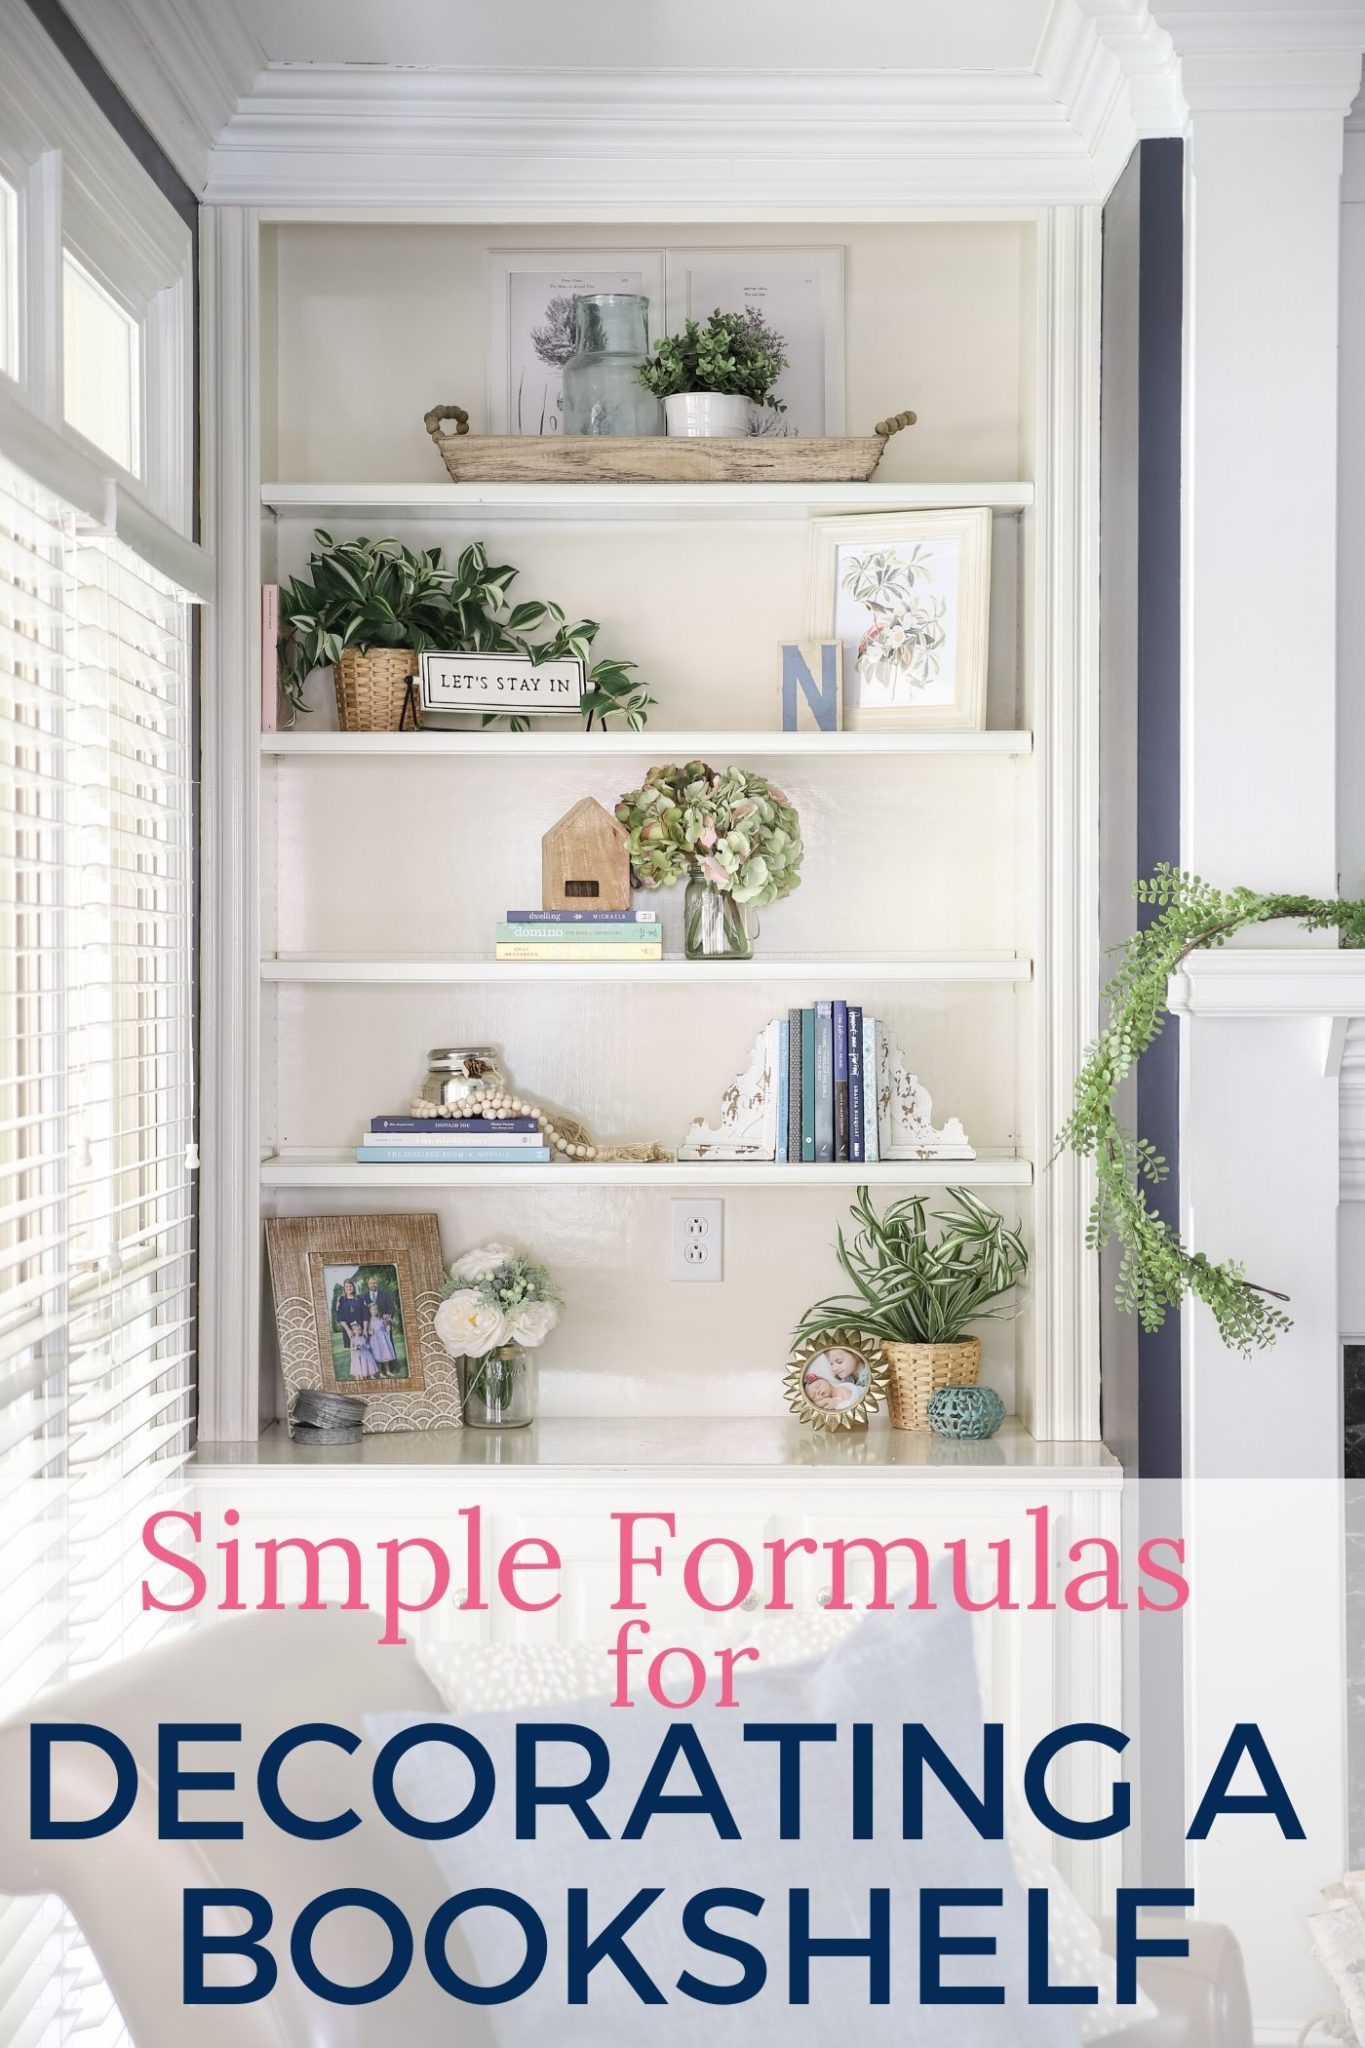 Simple Formulas for Decorating Bookshelves